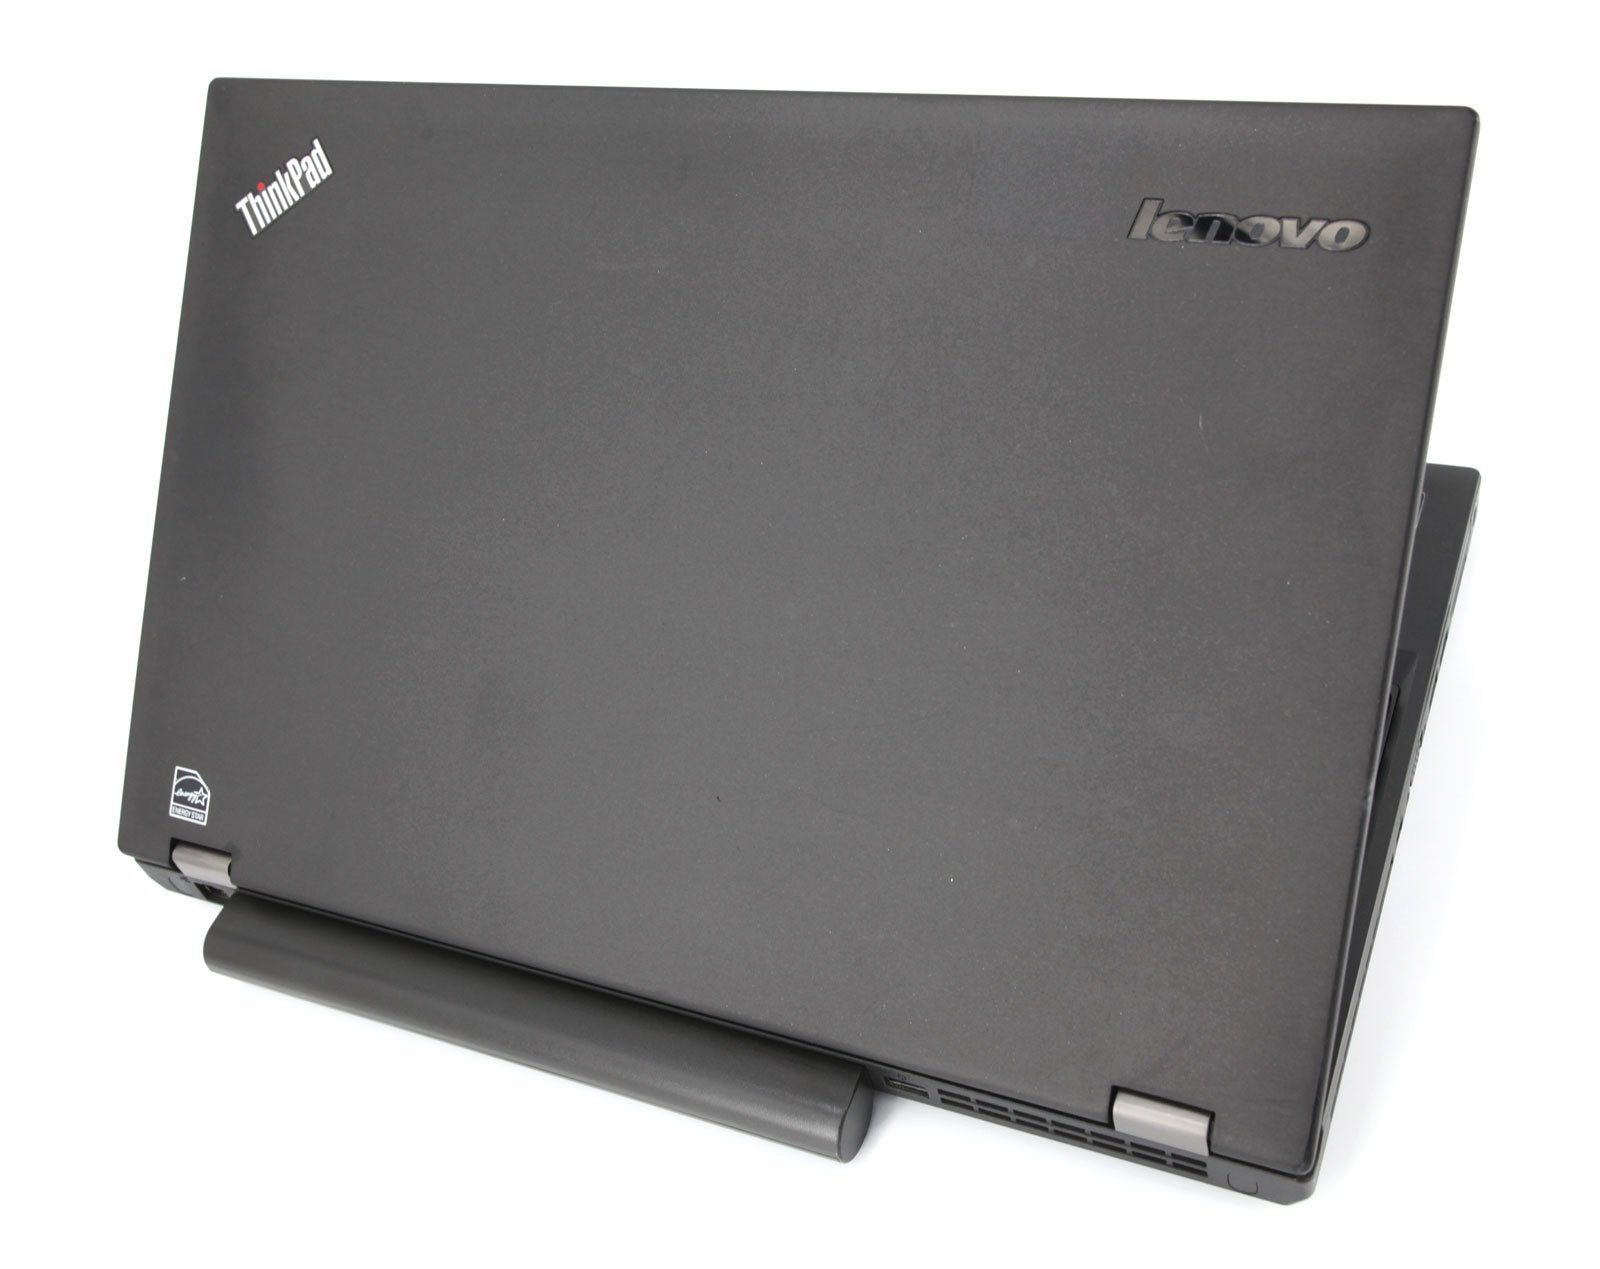 Lenovo ThinkPad W541 15.6" Laptop: 4th Gen i7, 12GB, 240GB SSD, Quadro, VAT - CruiseTech